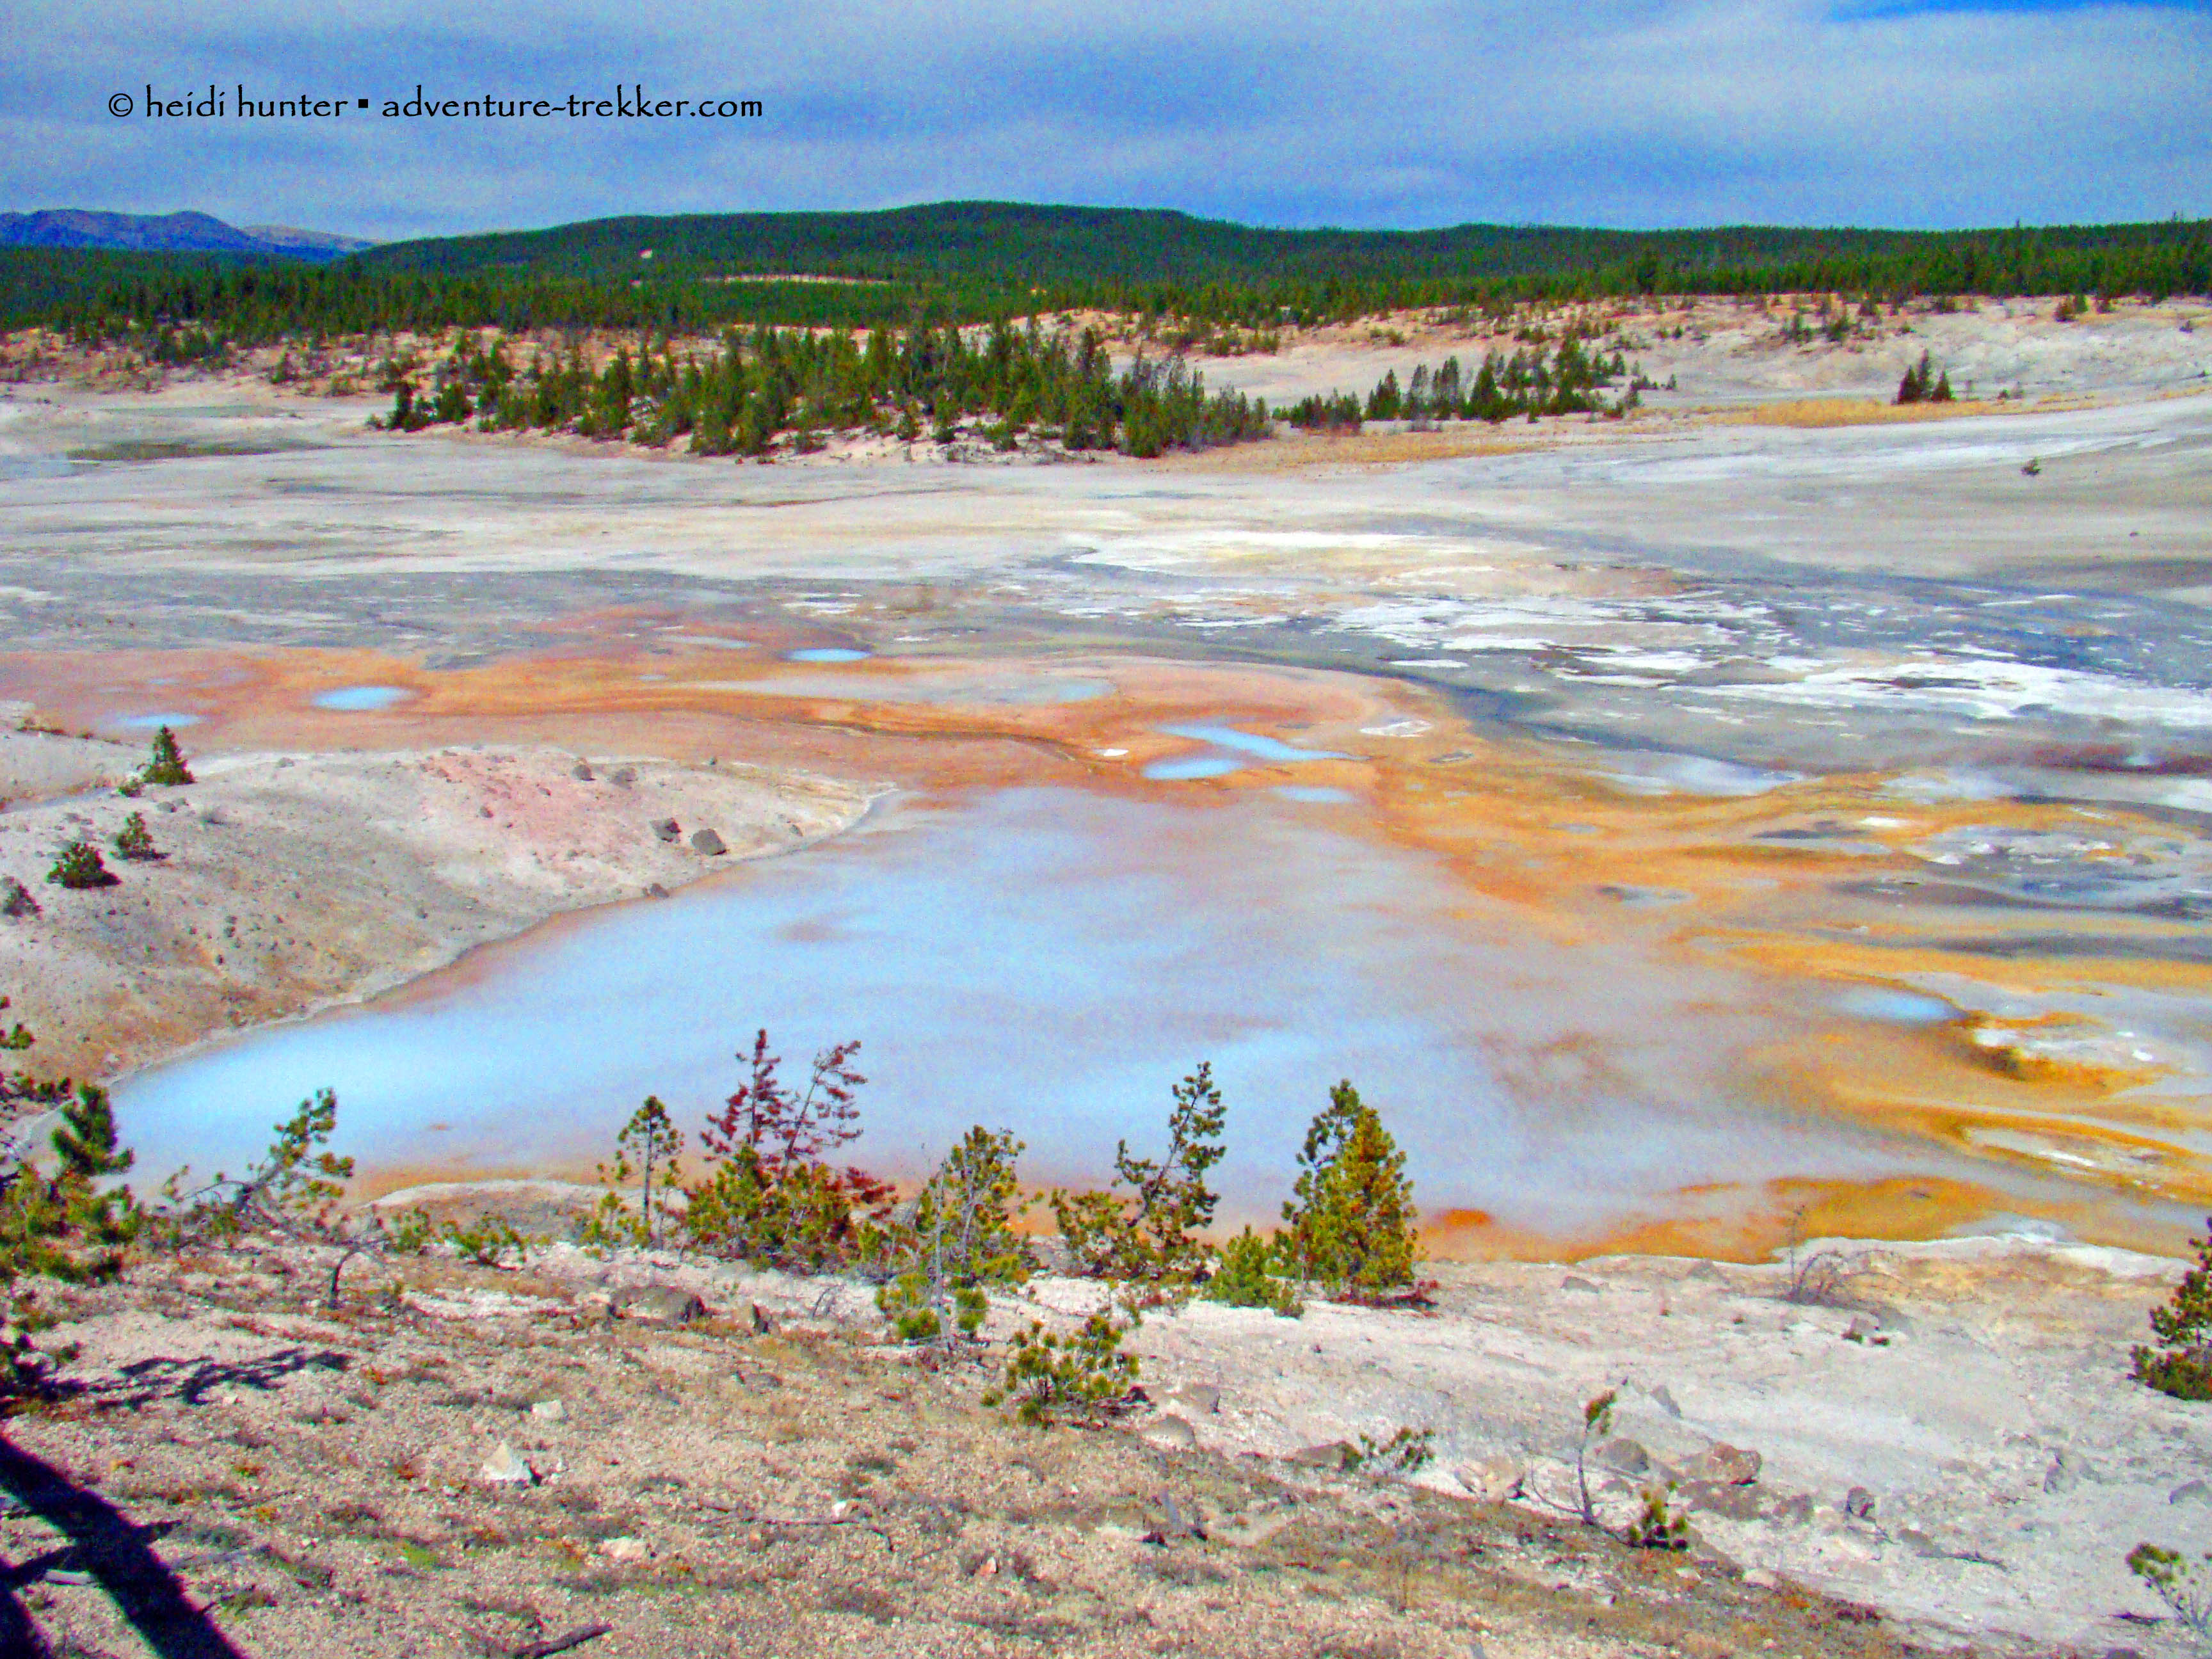 yellowstone norris geyser basin (38) 2